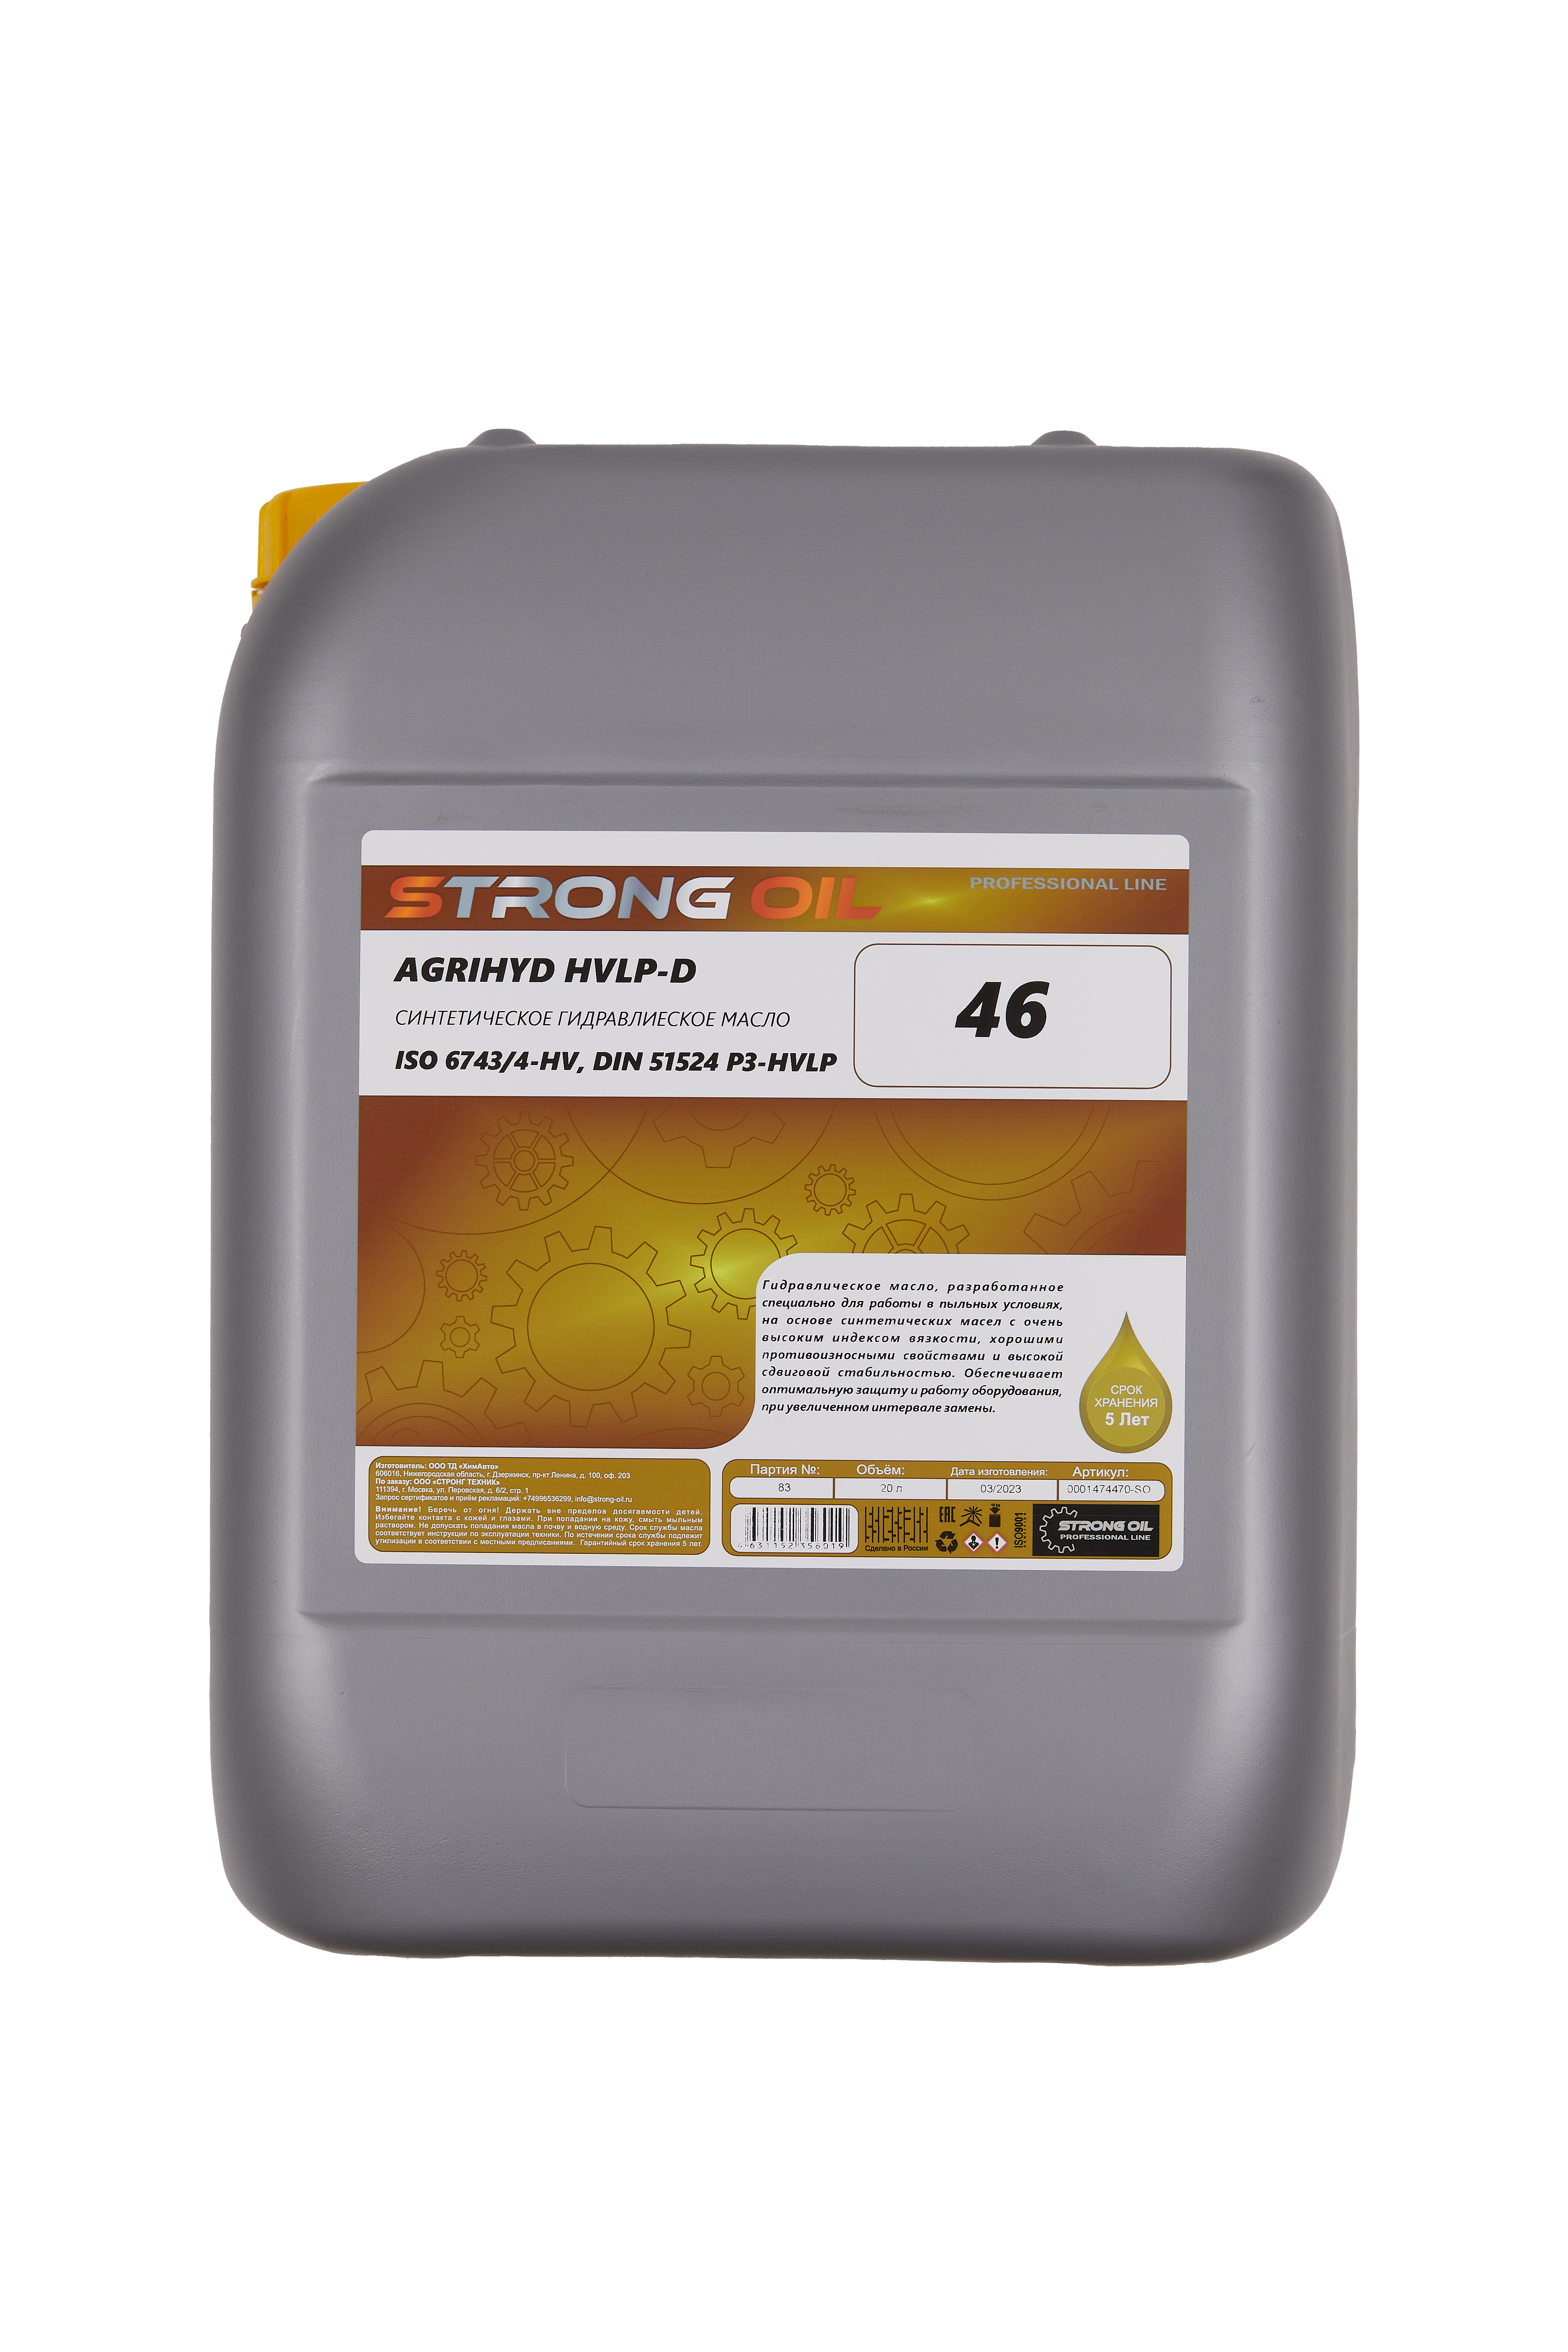 Масло гидравлическое Agrihyd HVLP-D 46 STRONG OIL